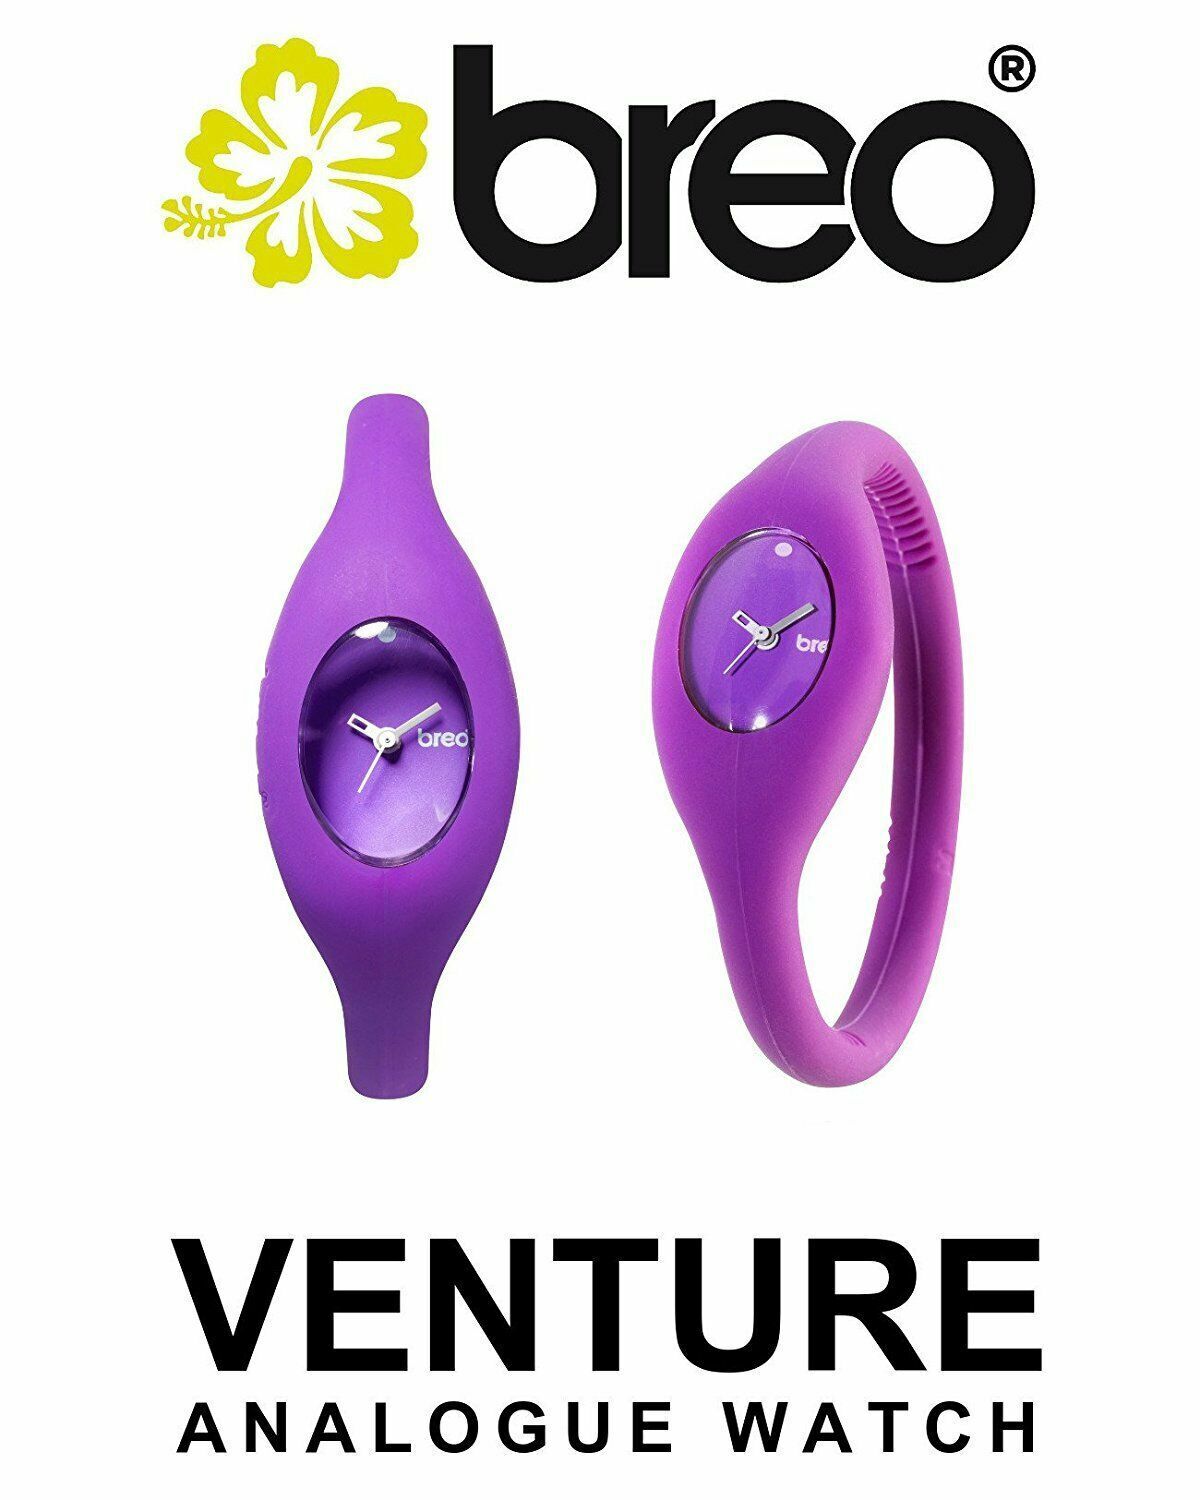 50x Breo VENTURE Analogue Strap Watch in Purple (Size Medium 17m) Joblot Case